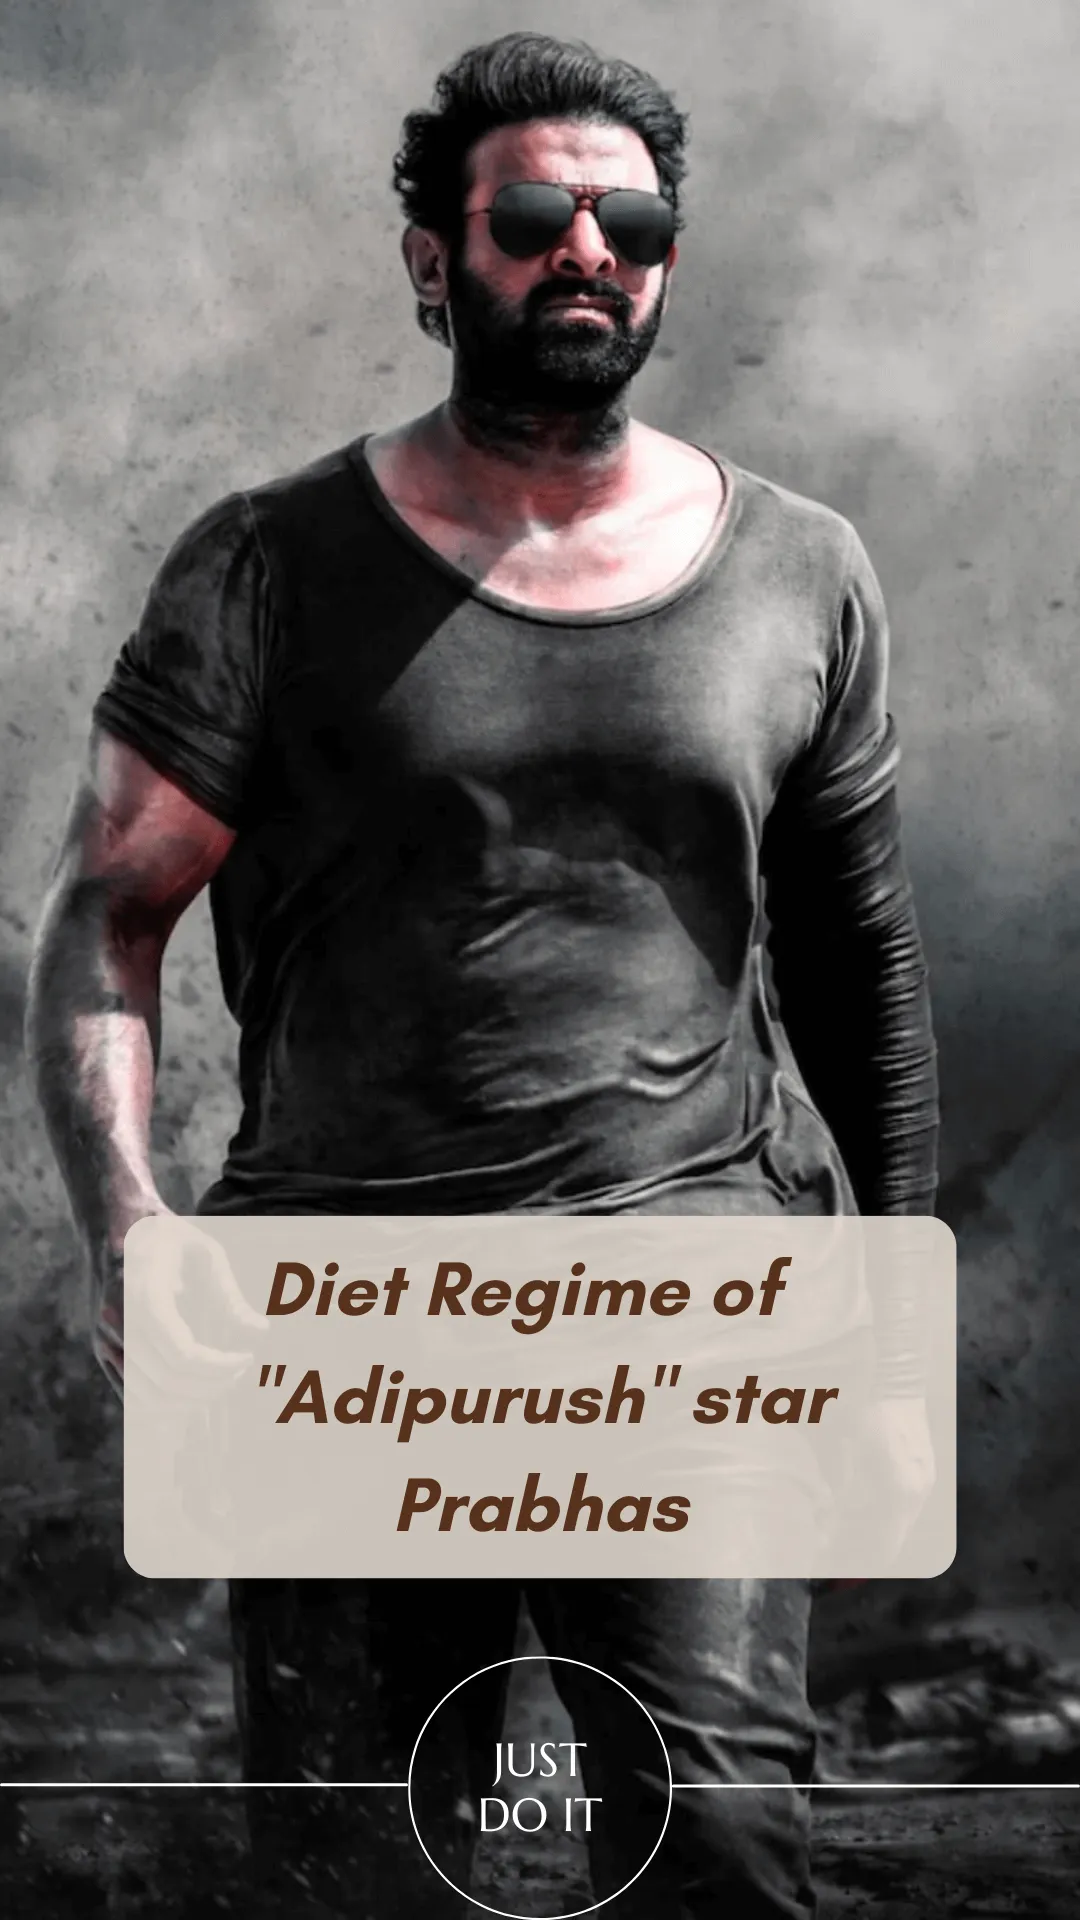 Diet Regime of "Adipurush" star Prabhas